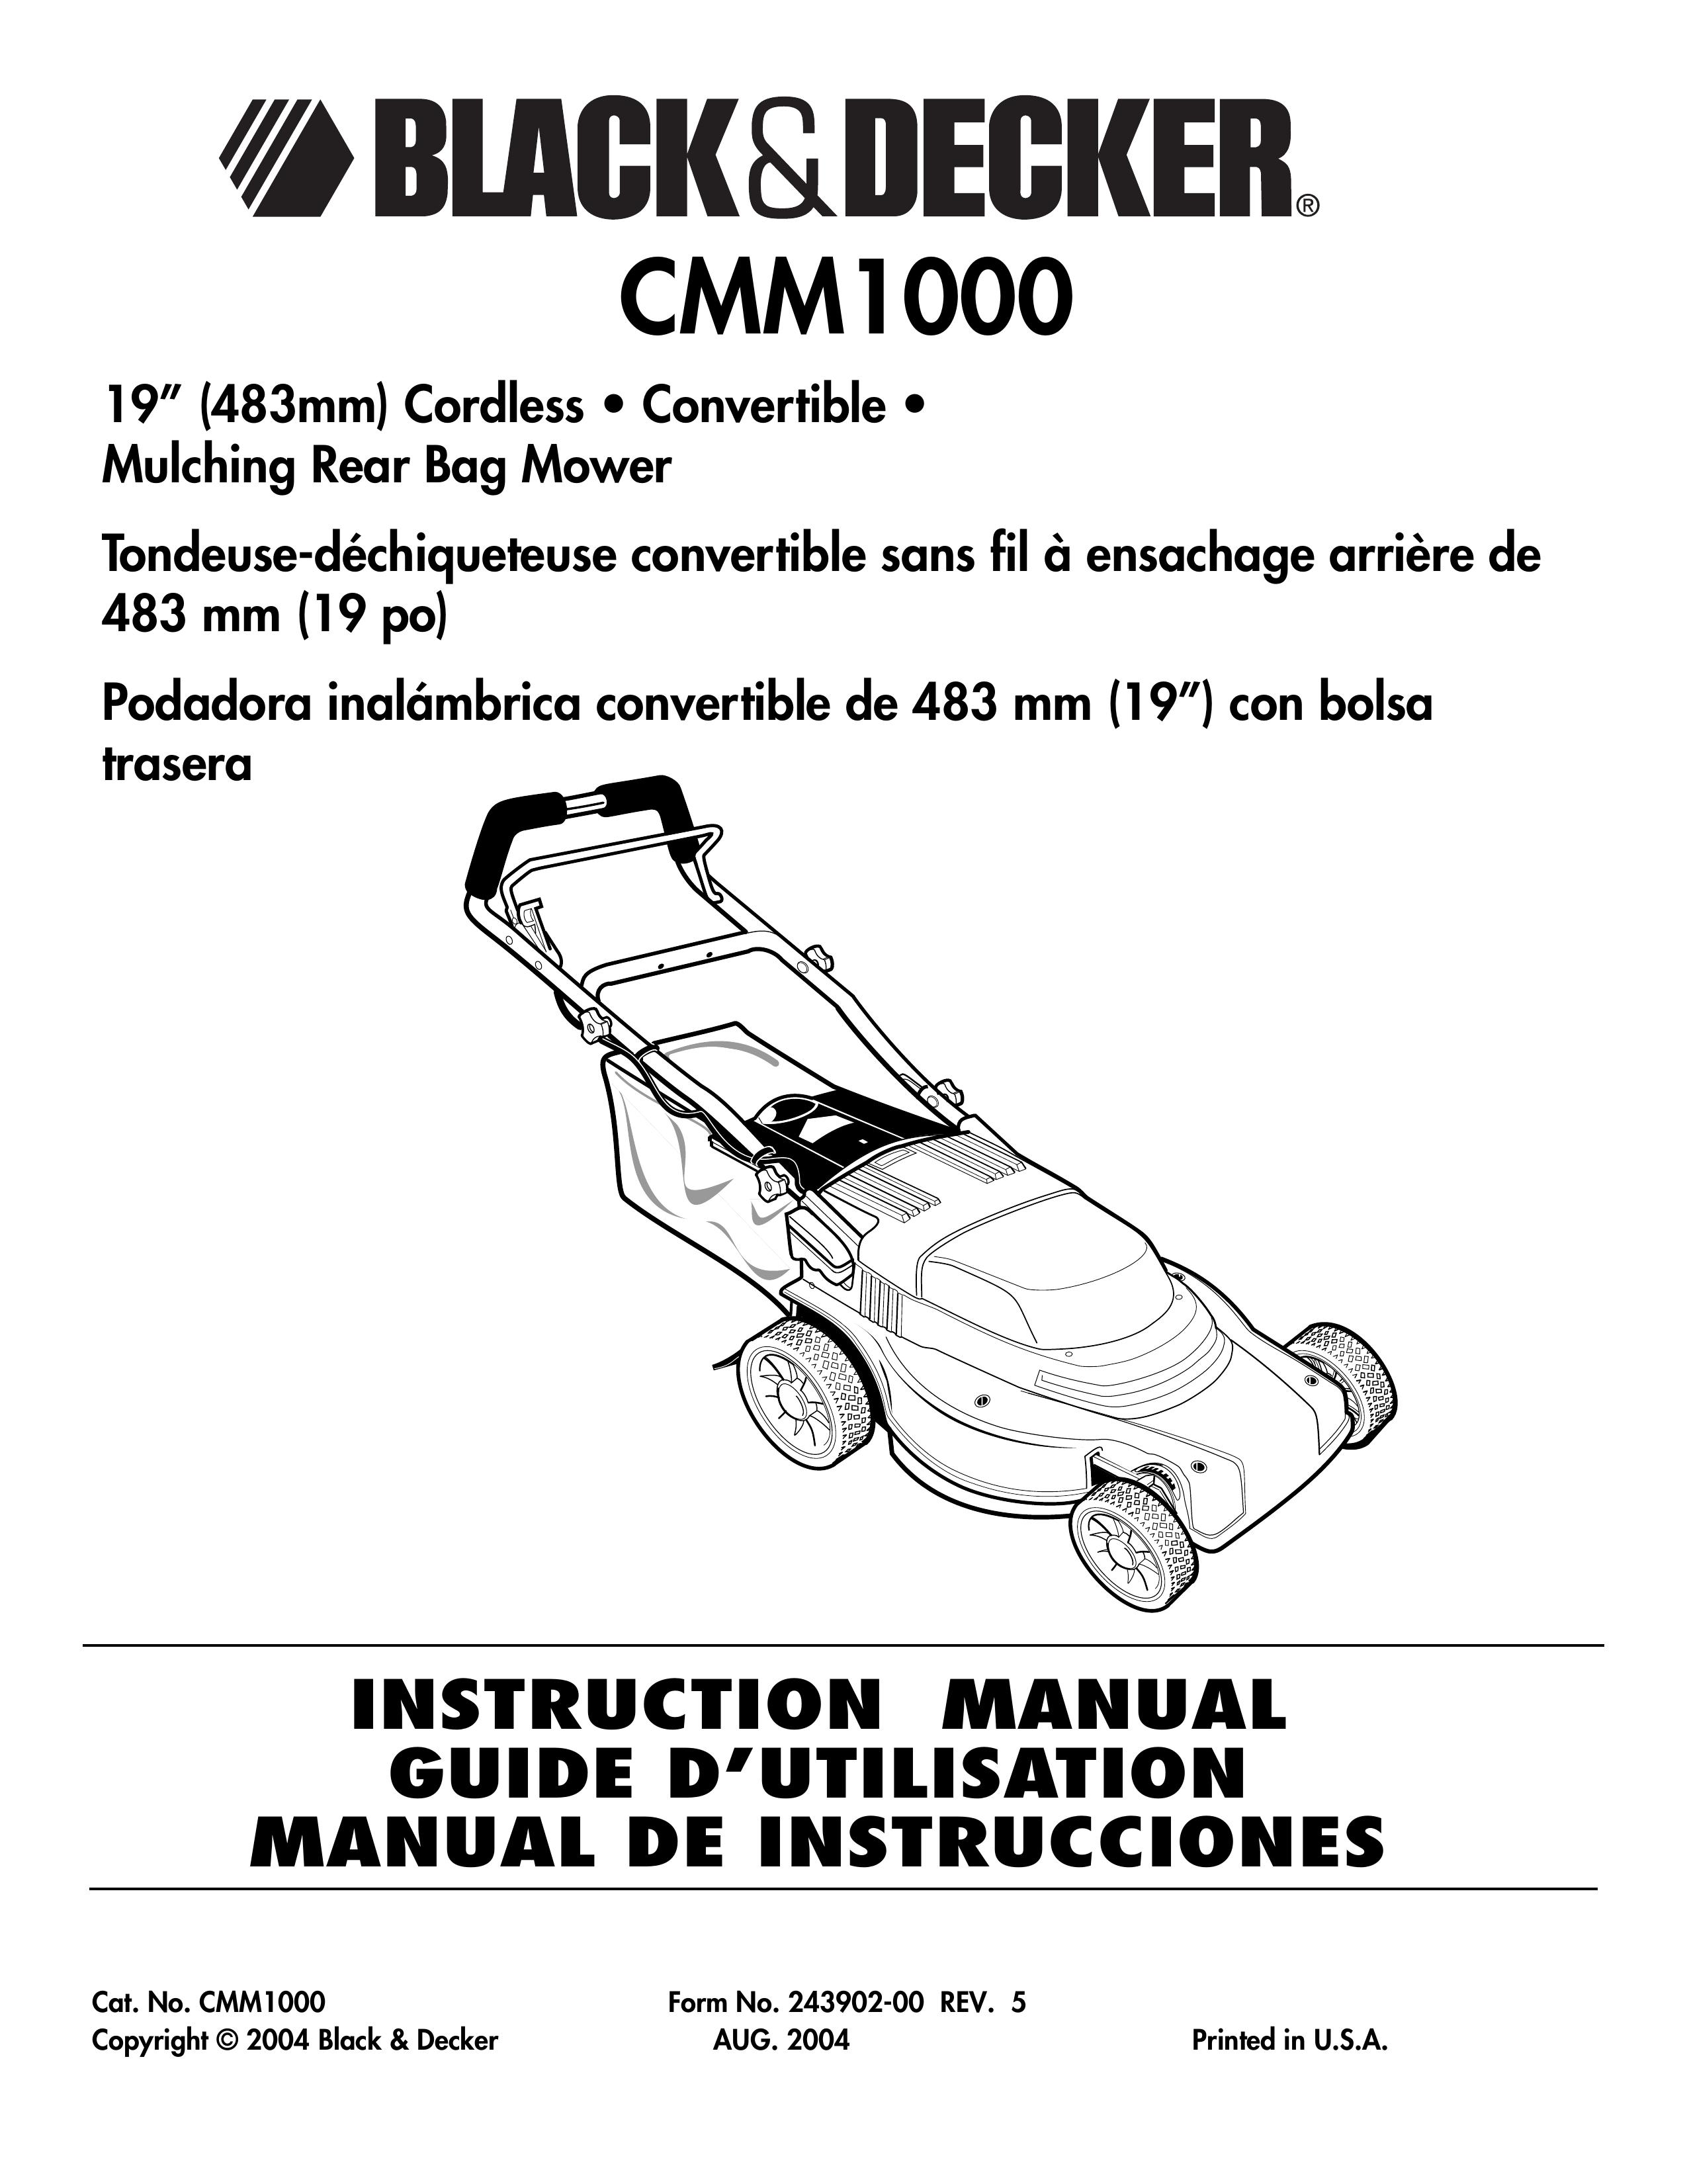 Black & Decker CMM1000 Lawn Mower User Manual